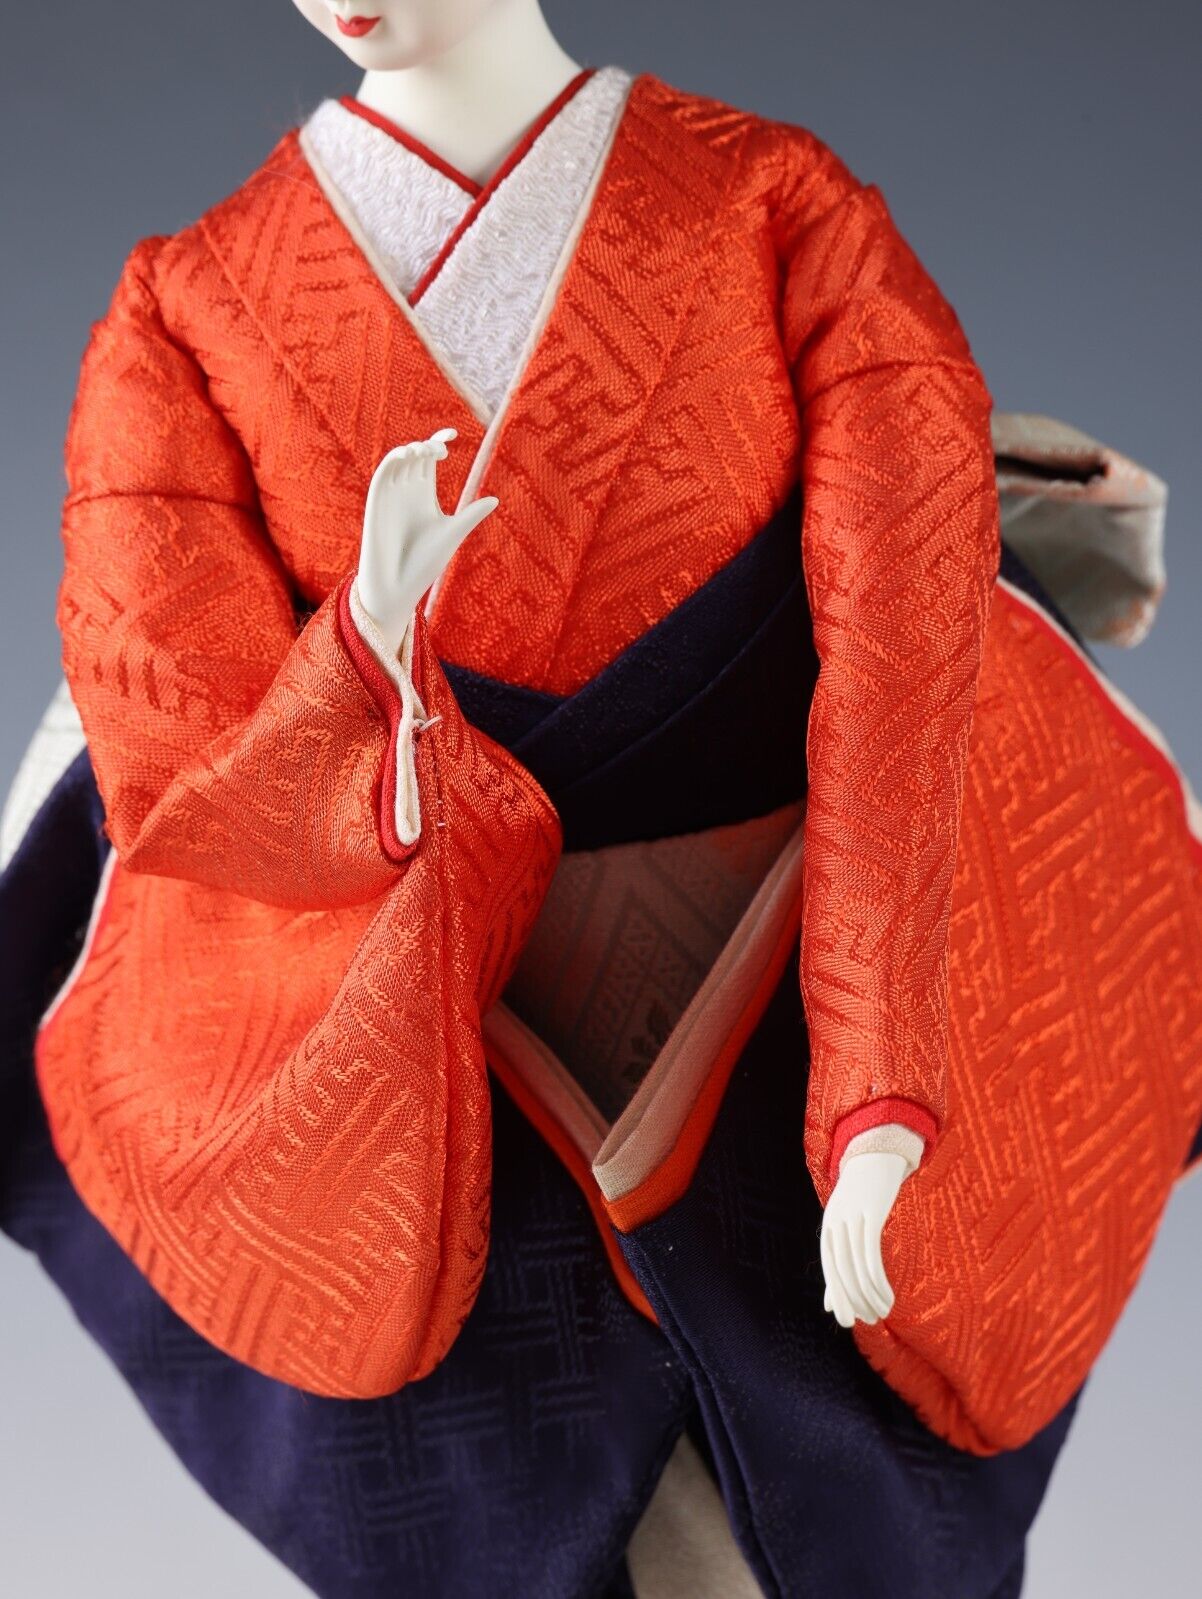 Japanese Collectible Vintage Geisha Doll in Traditional Kimono with Lantern.